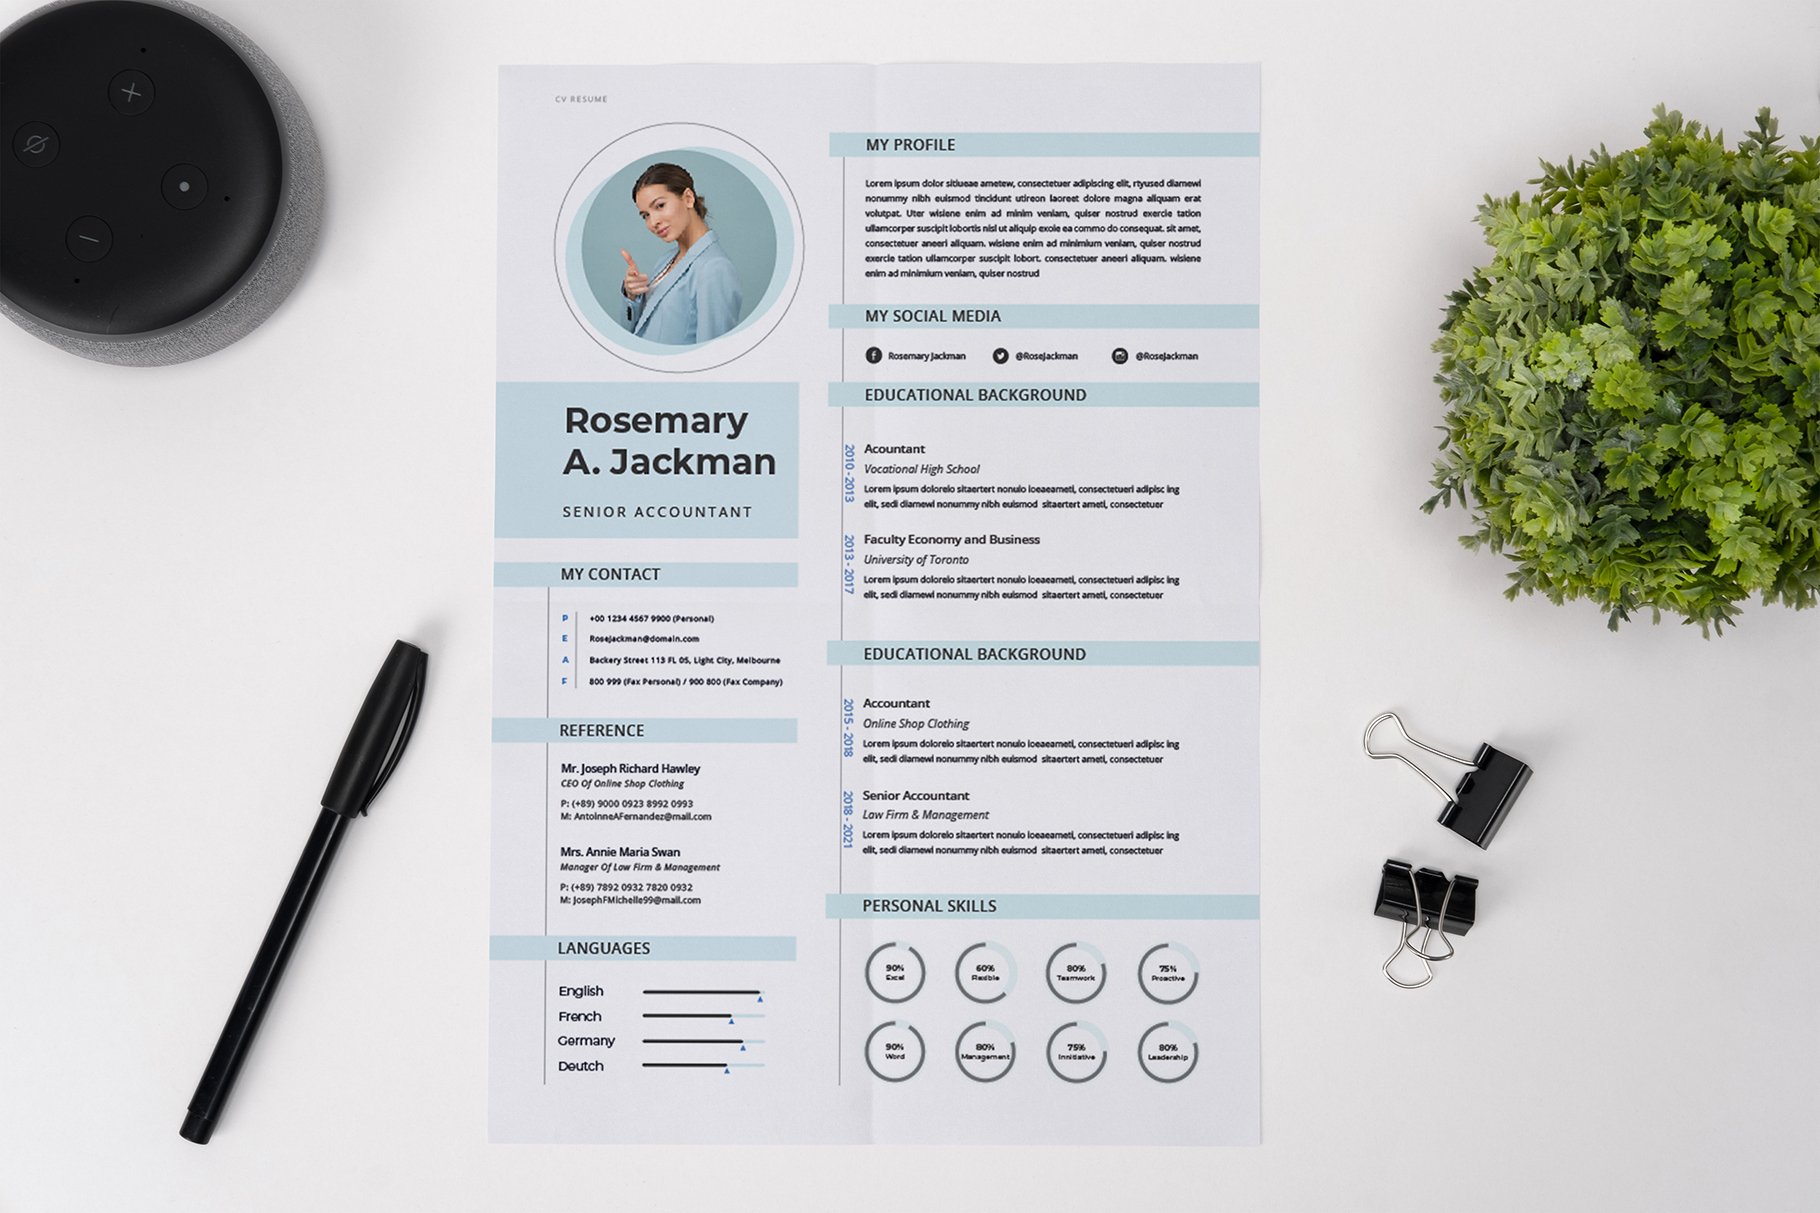 Soft Blue Accountant CV Resume preview image.